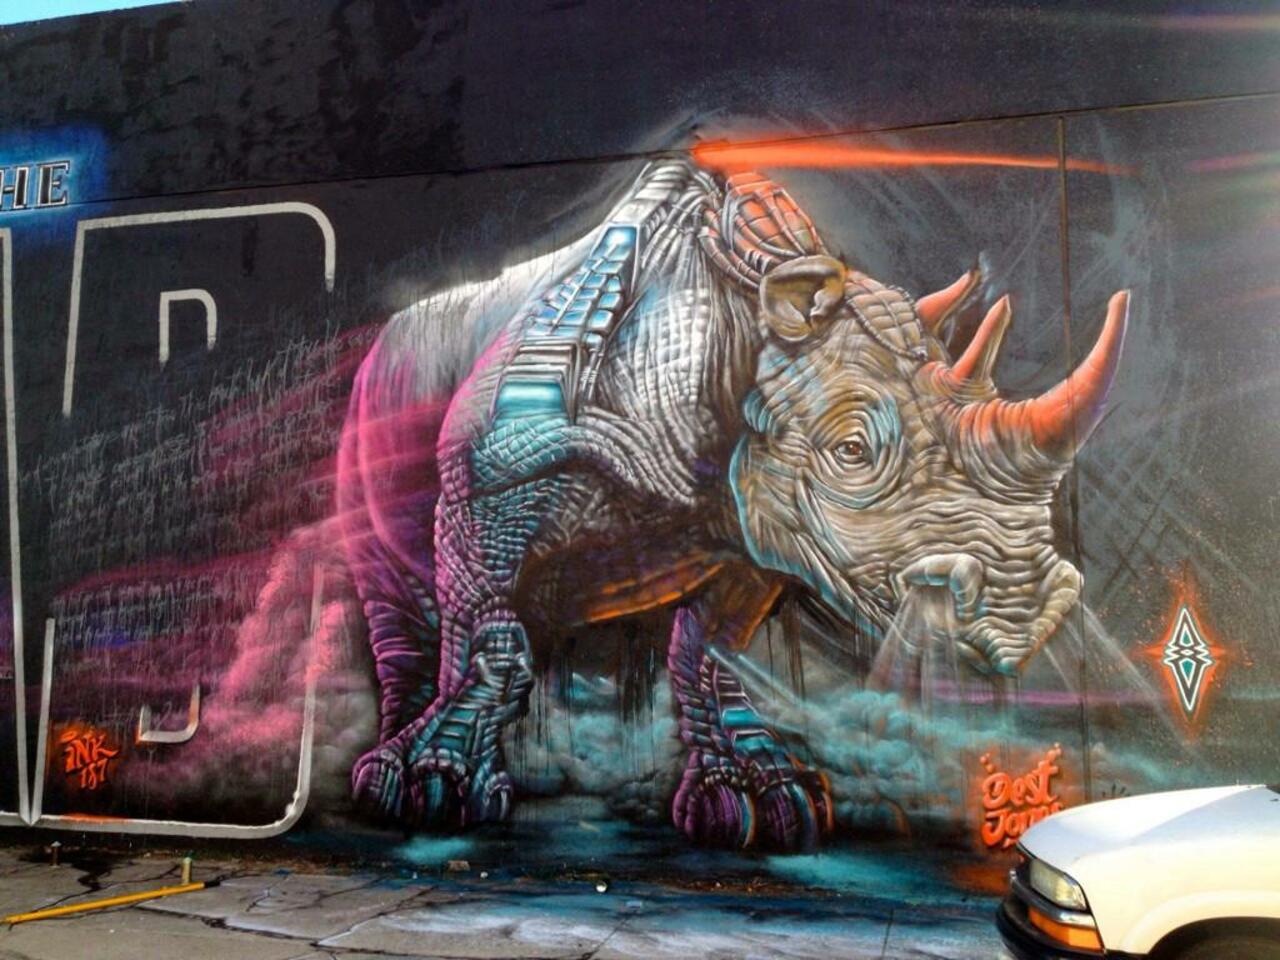 RT @GoogleStreetArt: Incredible Street Art by artist Dest 

#art #mural #graffiti #streetart http://t.co/zniwZOHk5W